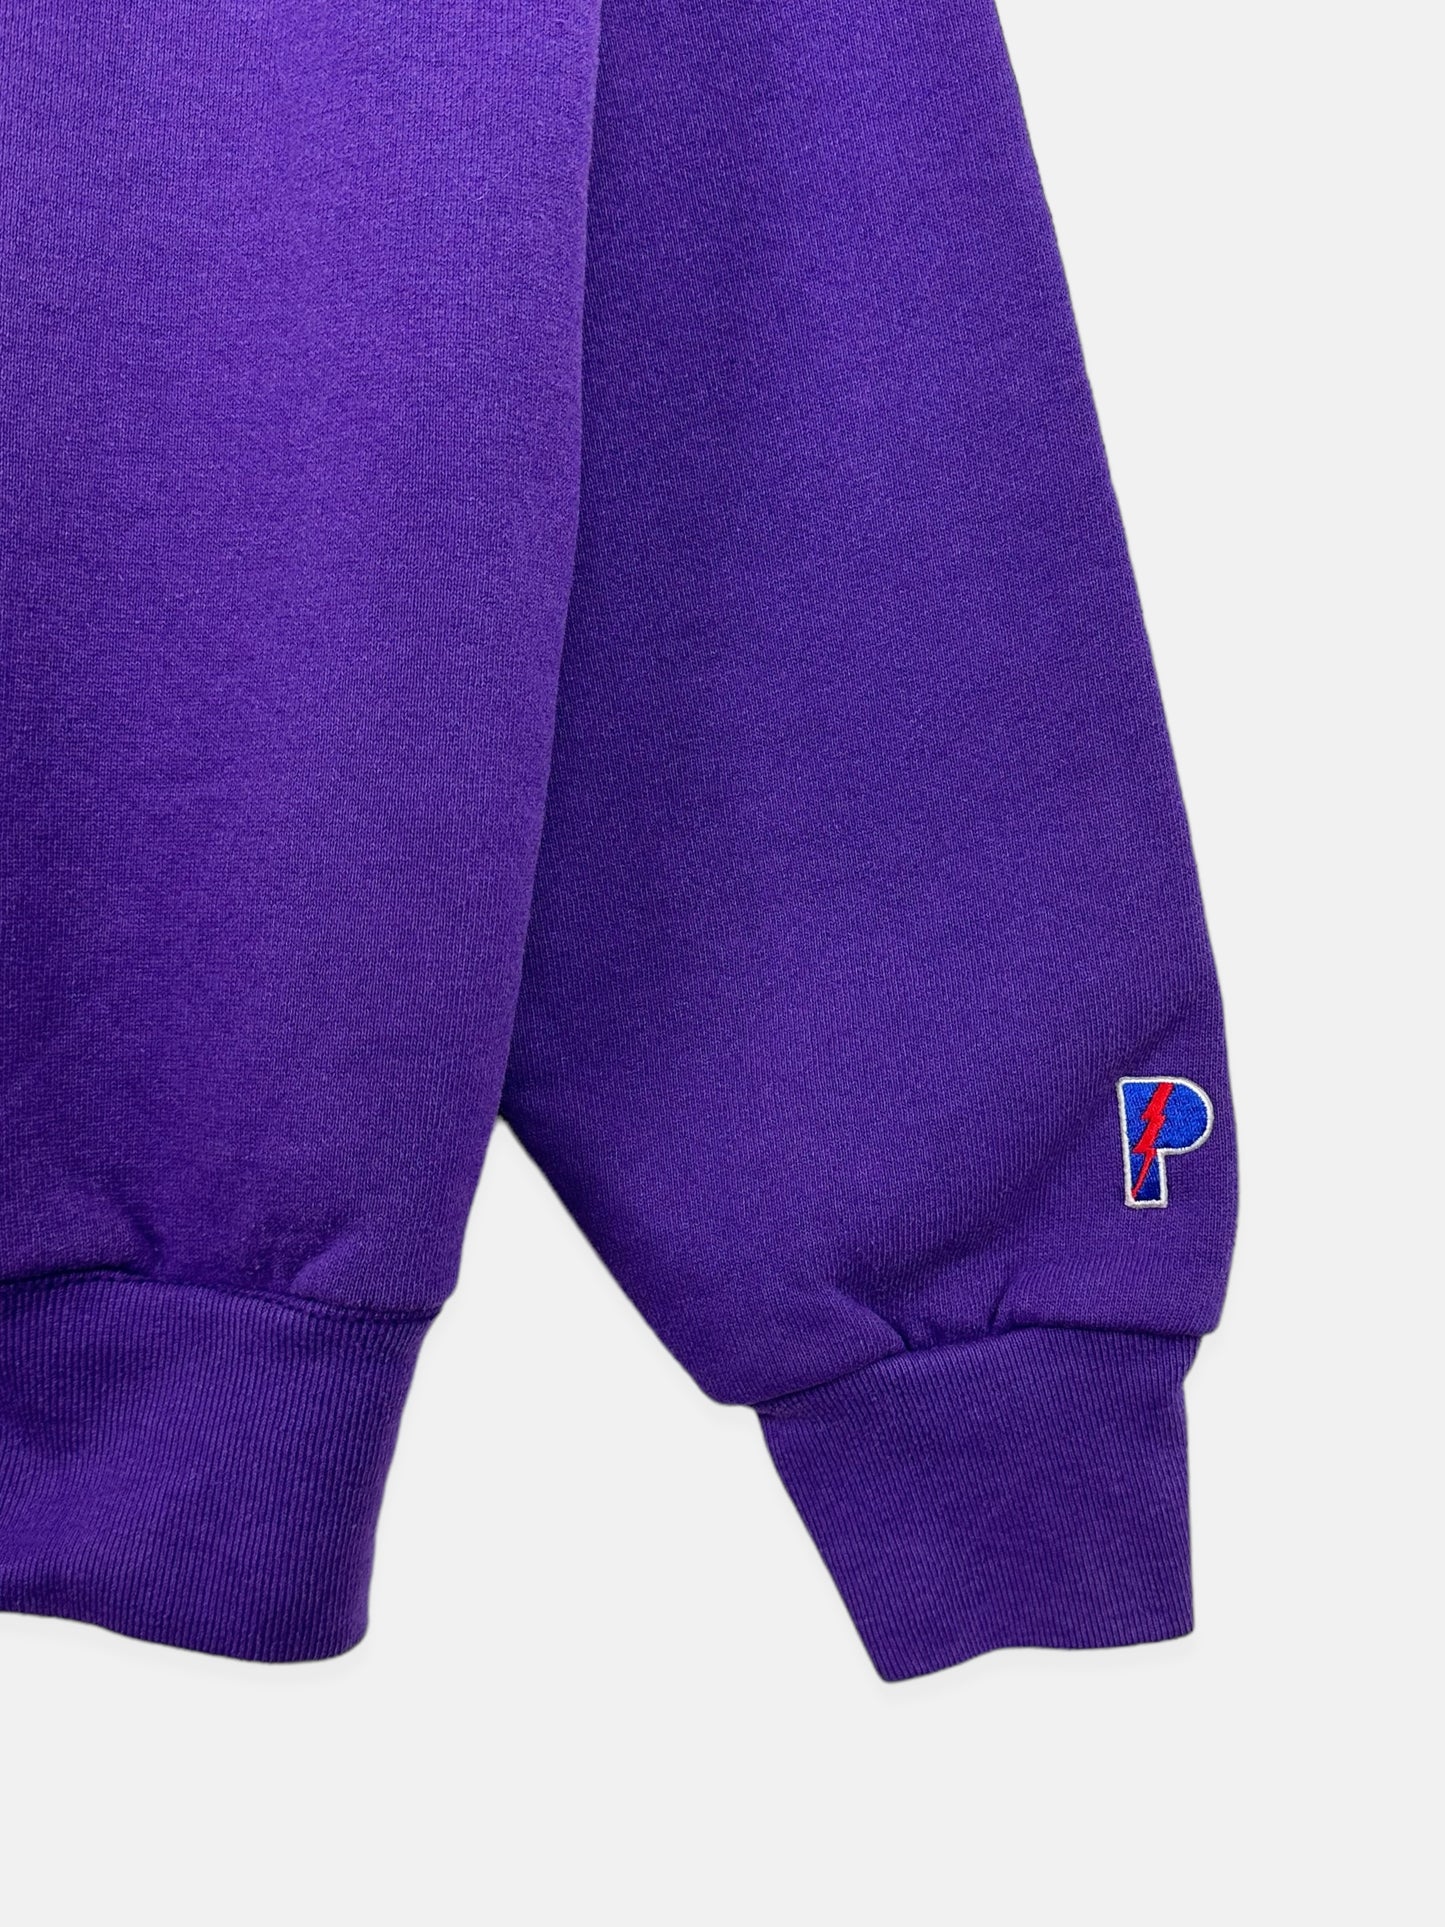 90's Baltimore Ravens NFL USA Made Embroidered Vintage Sweatshirt Size M-L